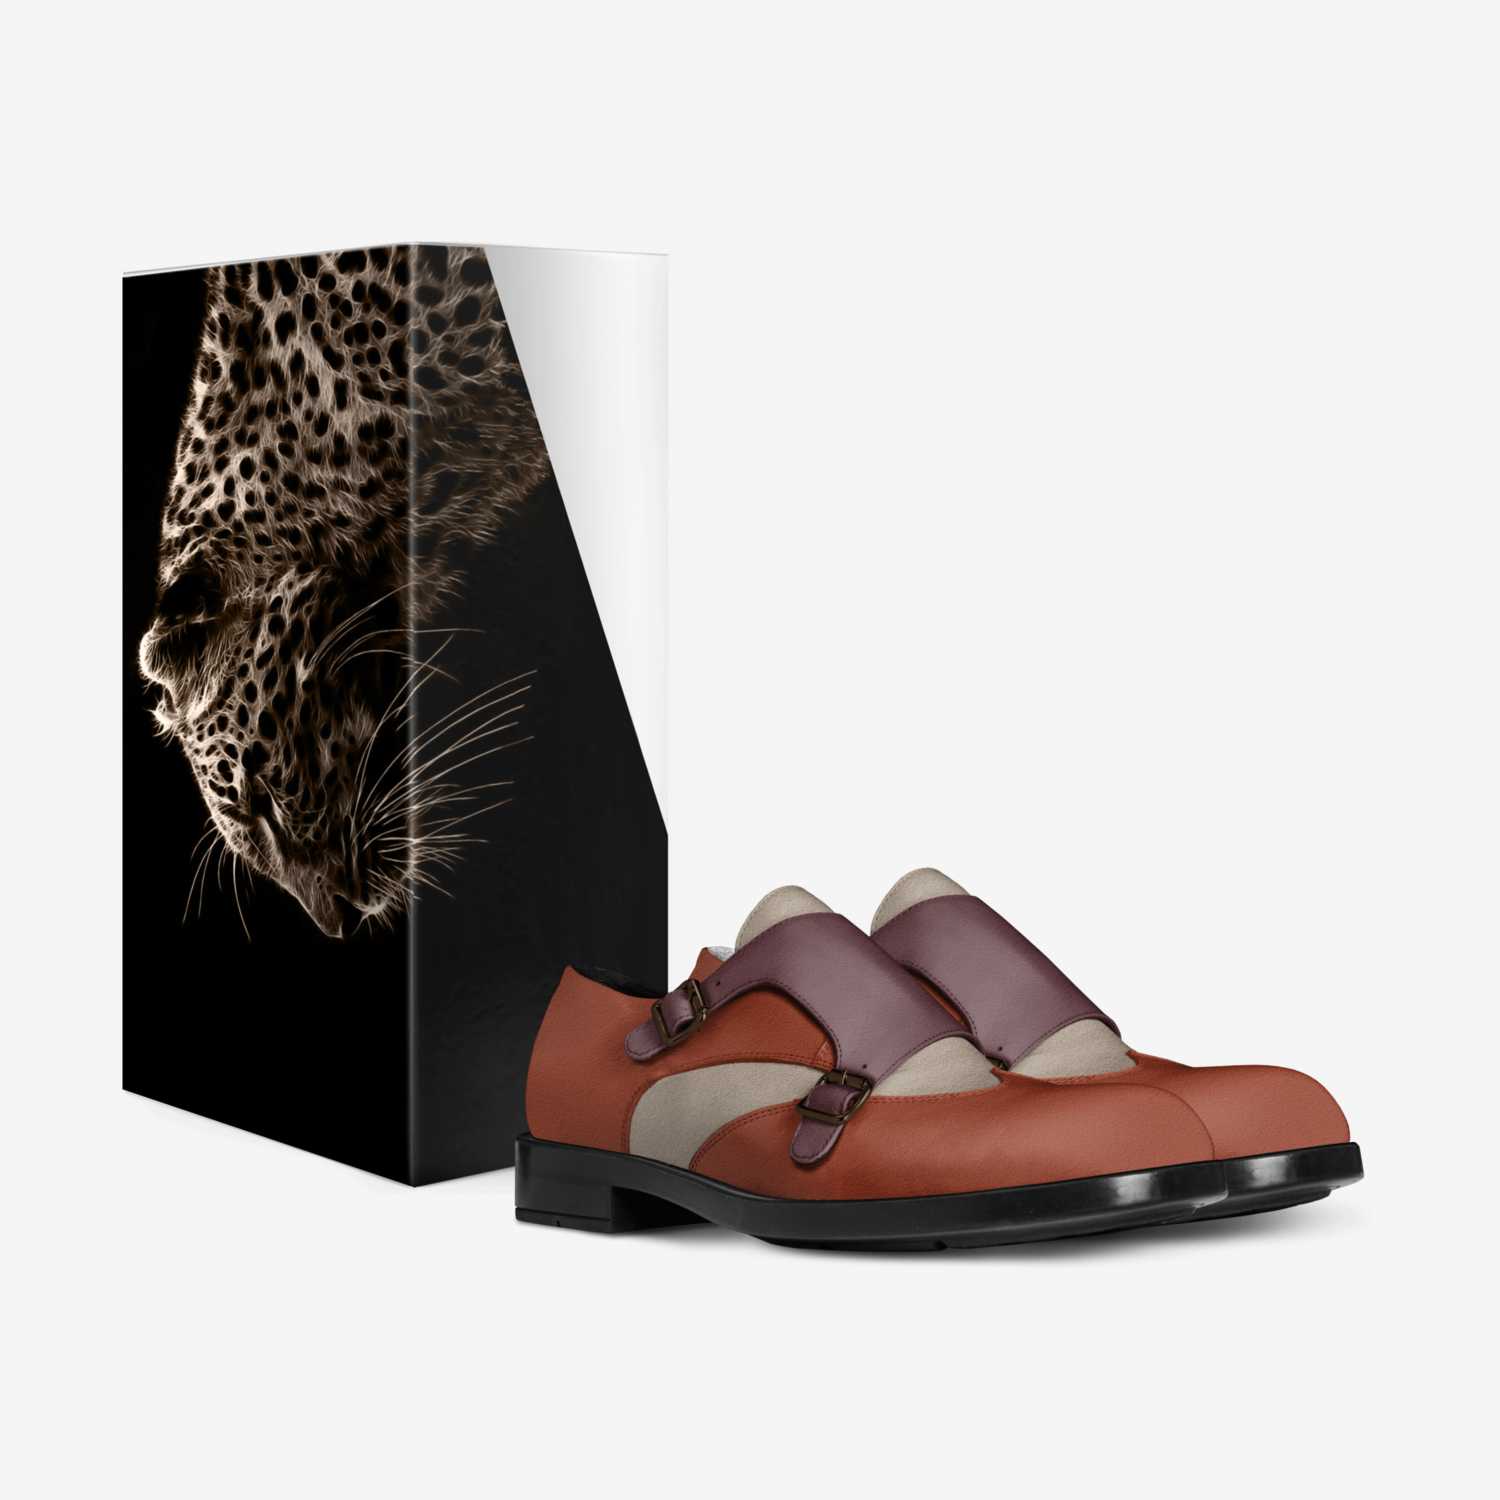 Howards custom made in Italy shoes by Theodora Howard | Box view